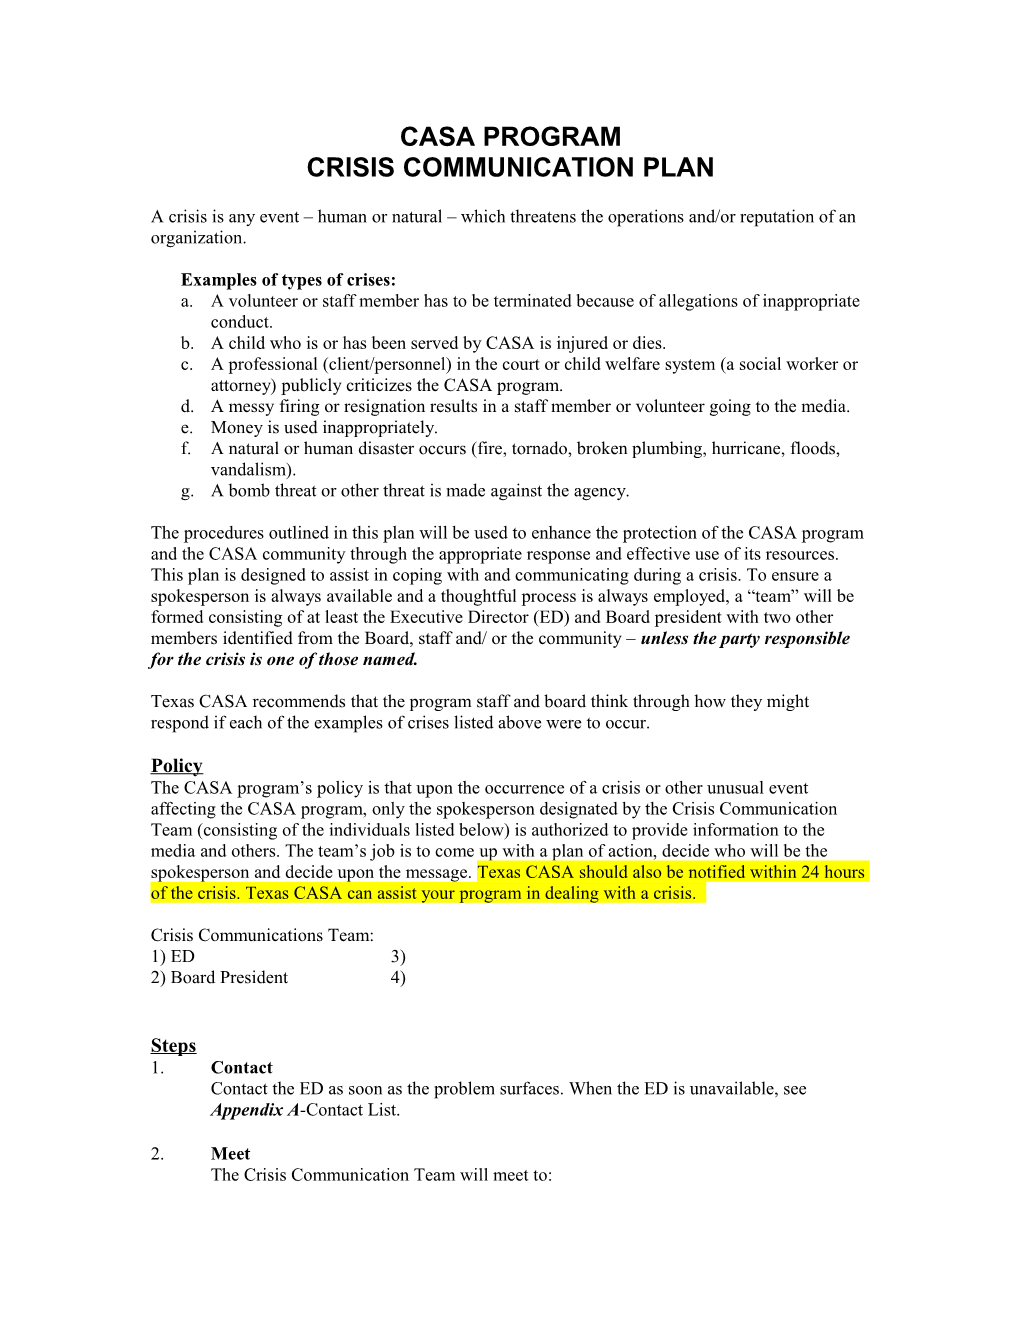 Crisis Communication Plan s1